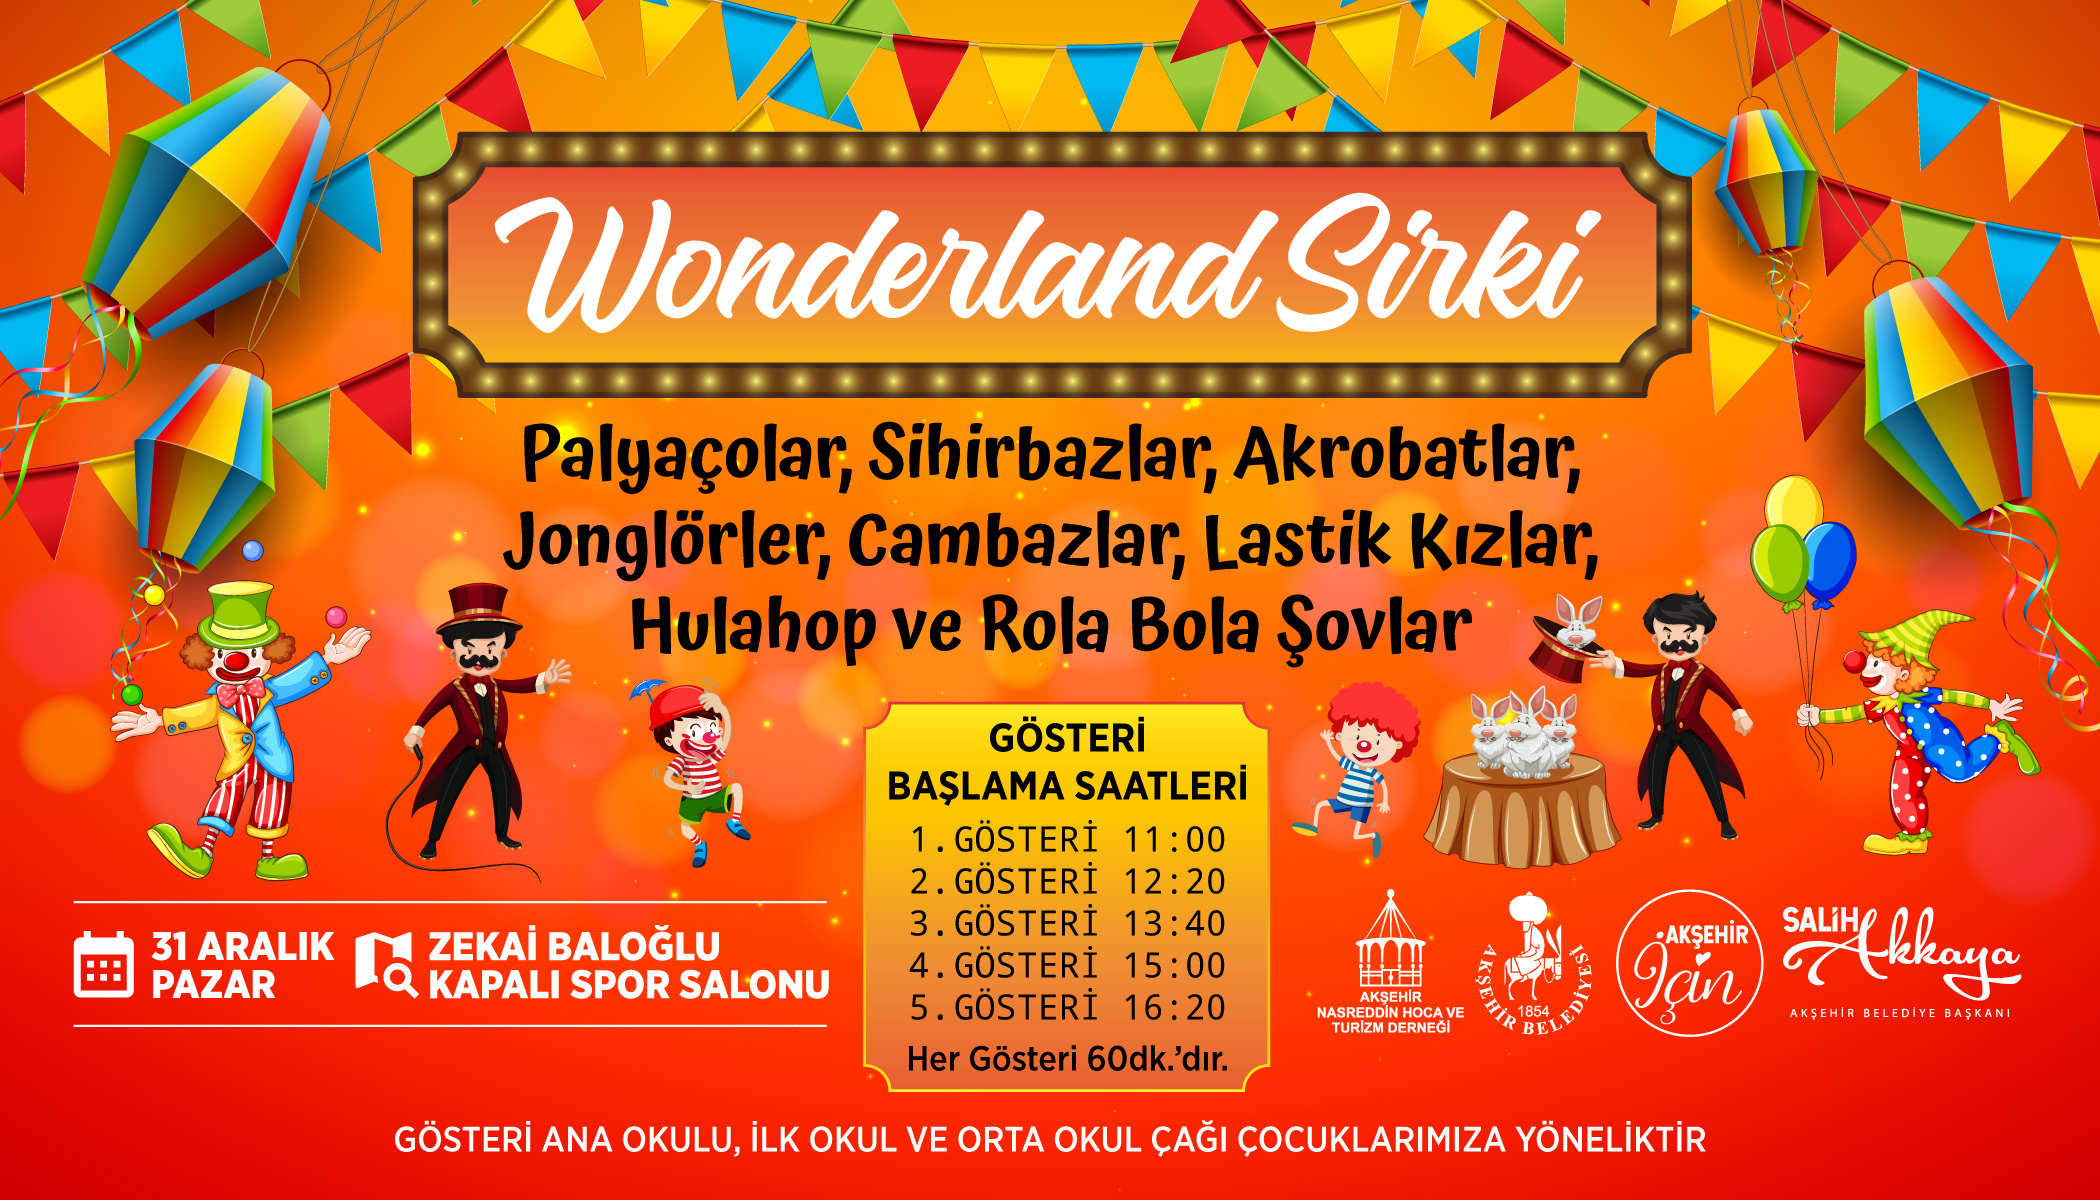 wonderland-sirki-2.jpg